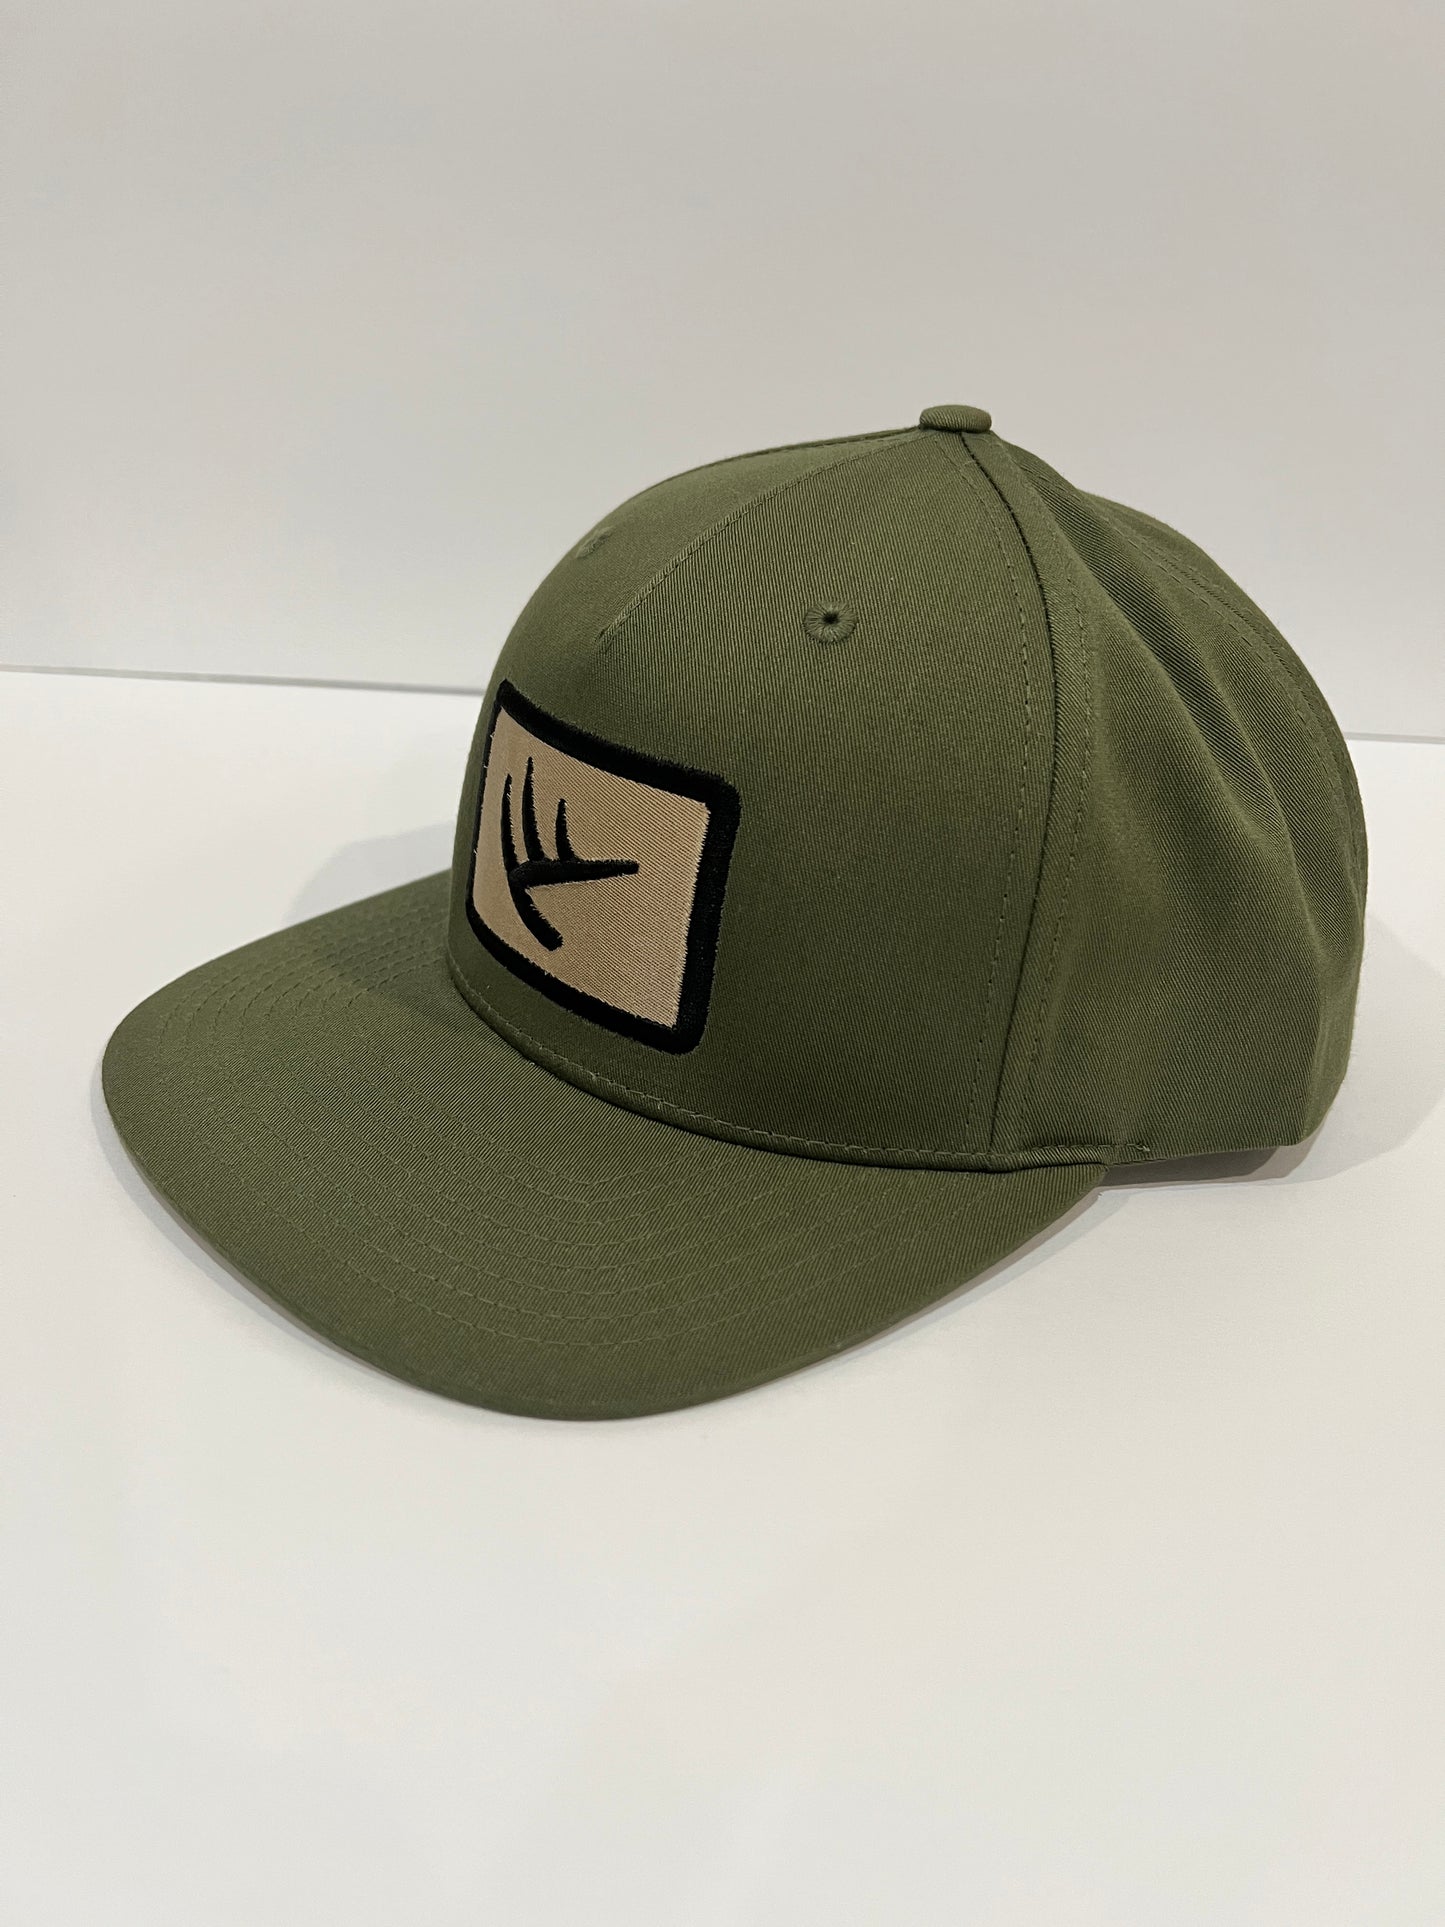 Richardson 255 Limited Edition Hats